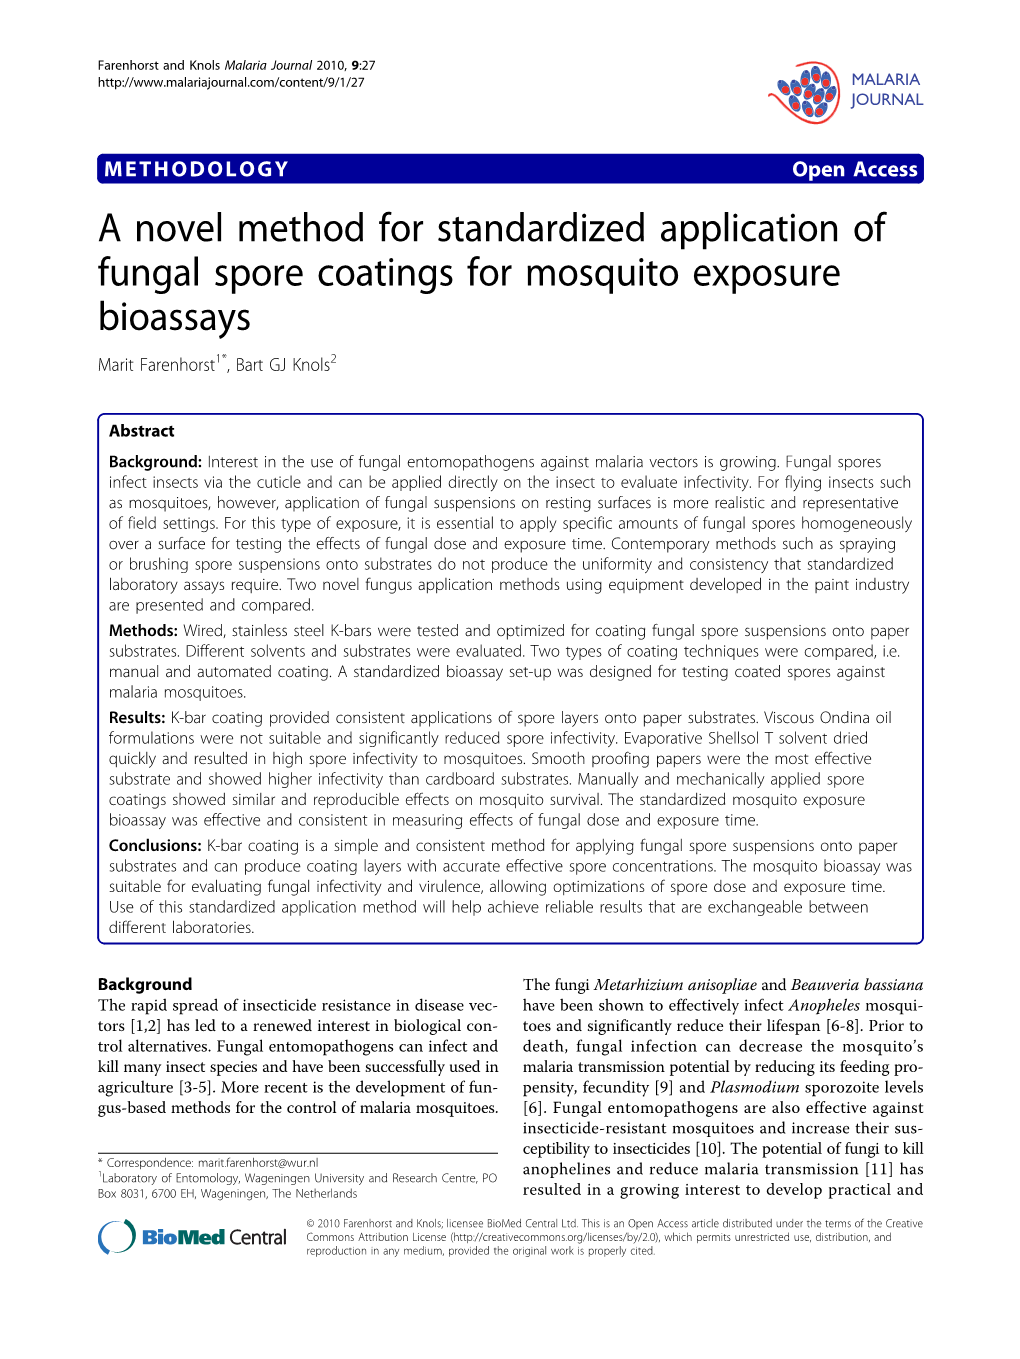 A Novel Method For Standardized Application Of Fungal Spore Coatings